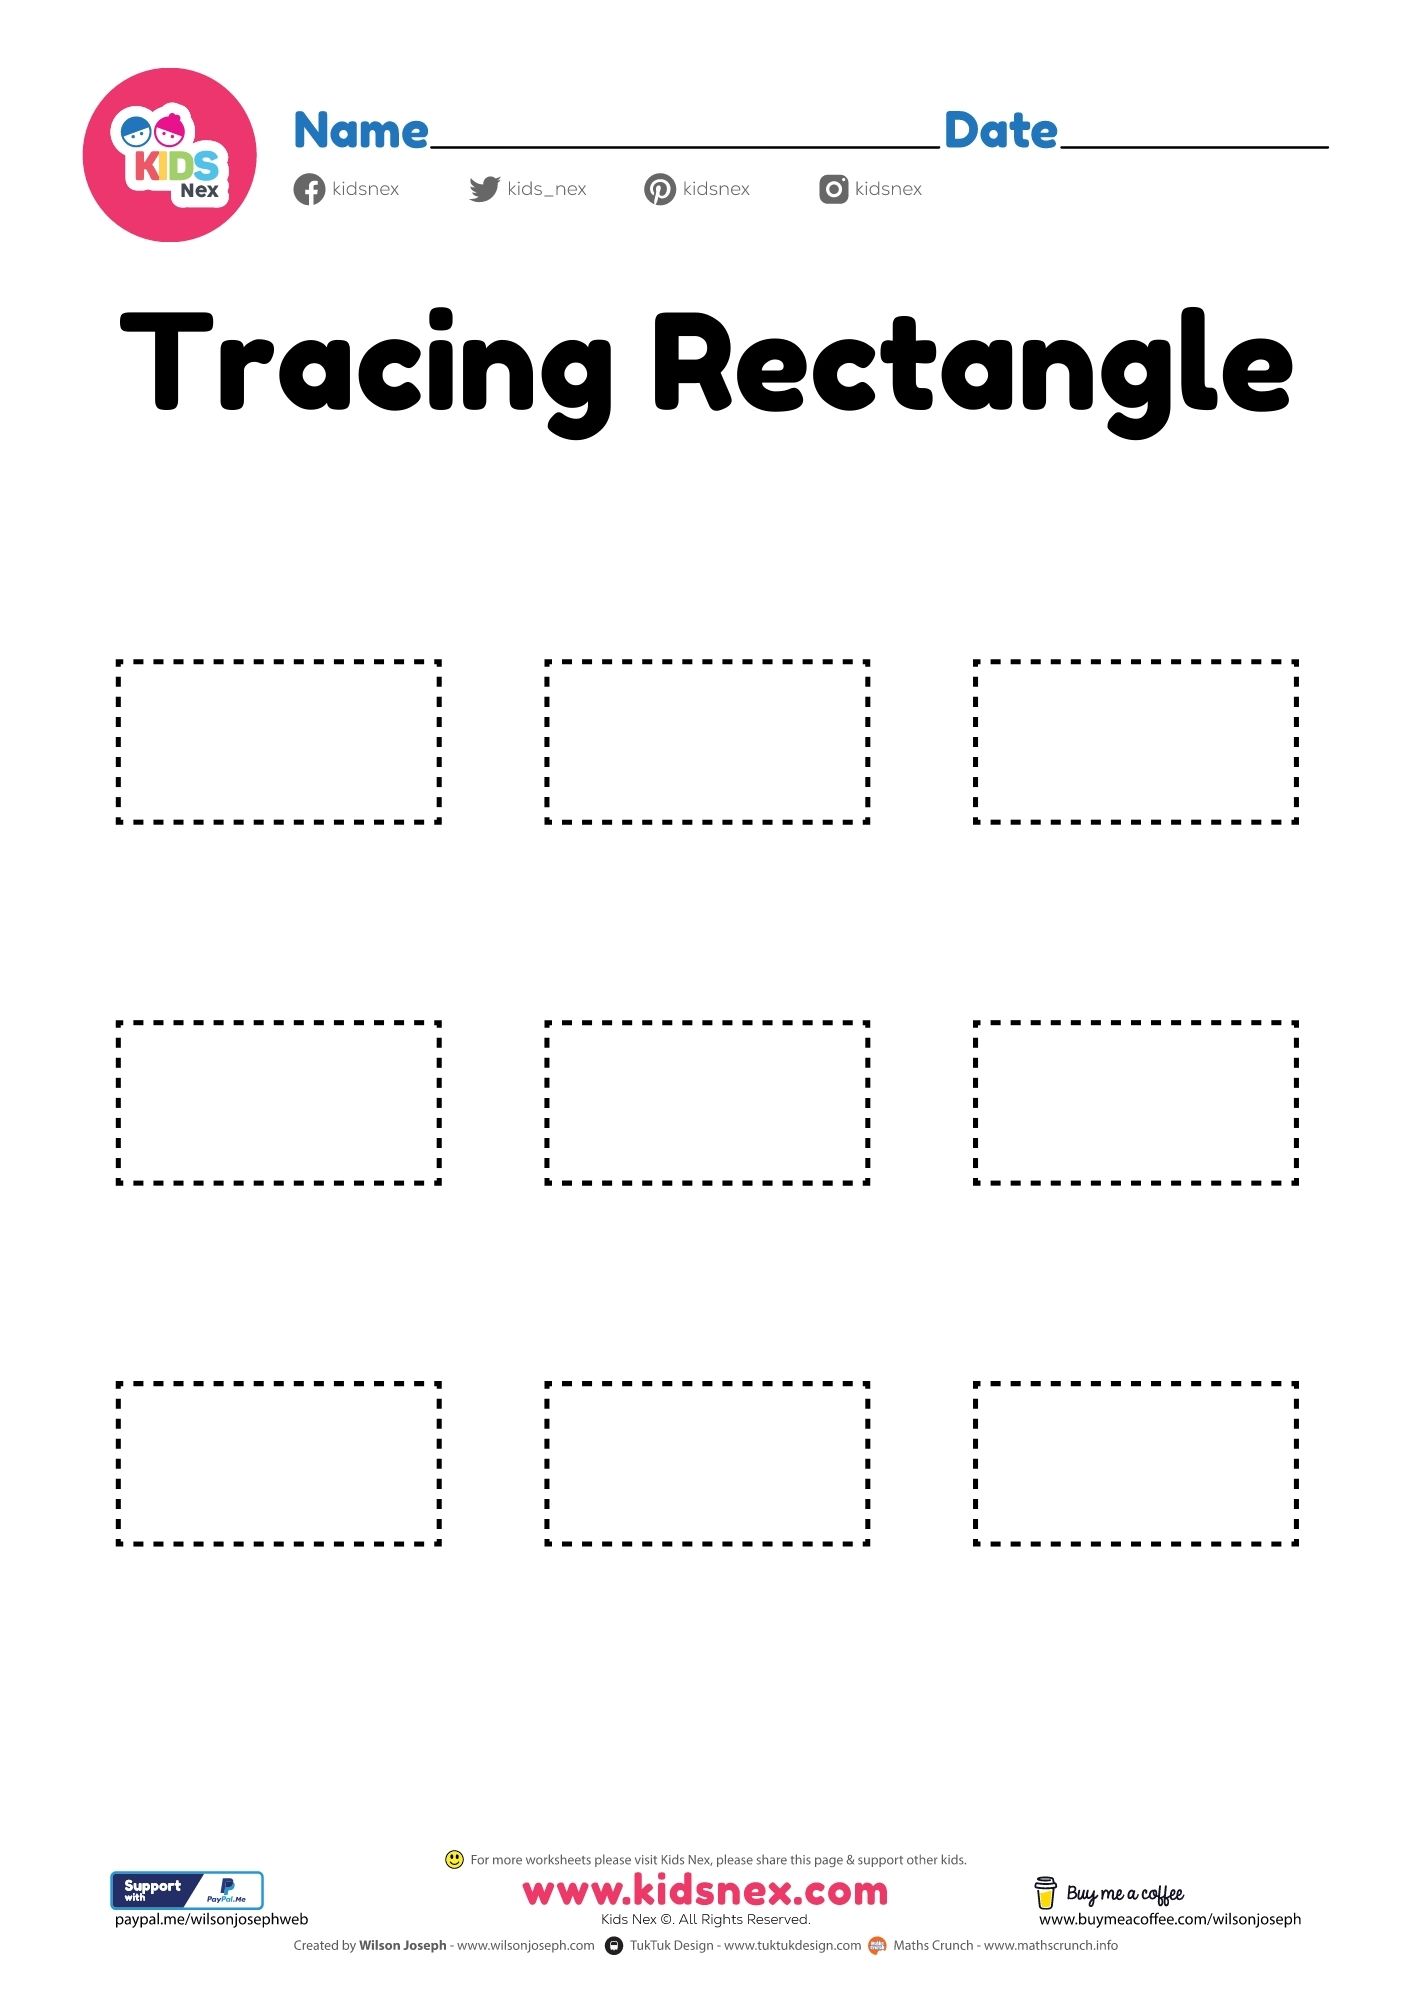 Tracing rectangle worksheet